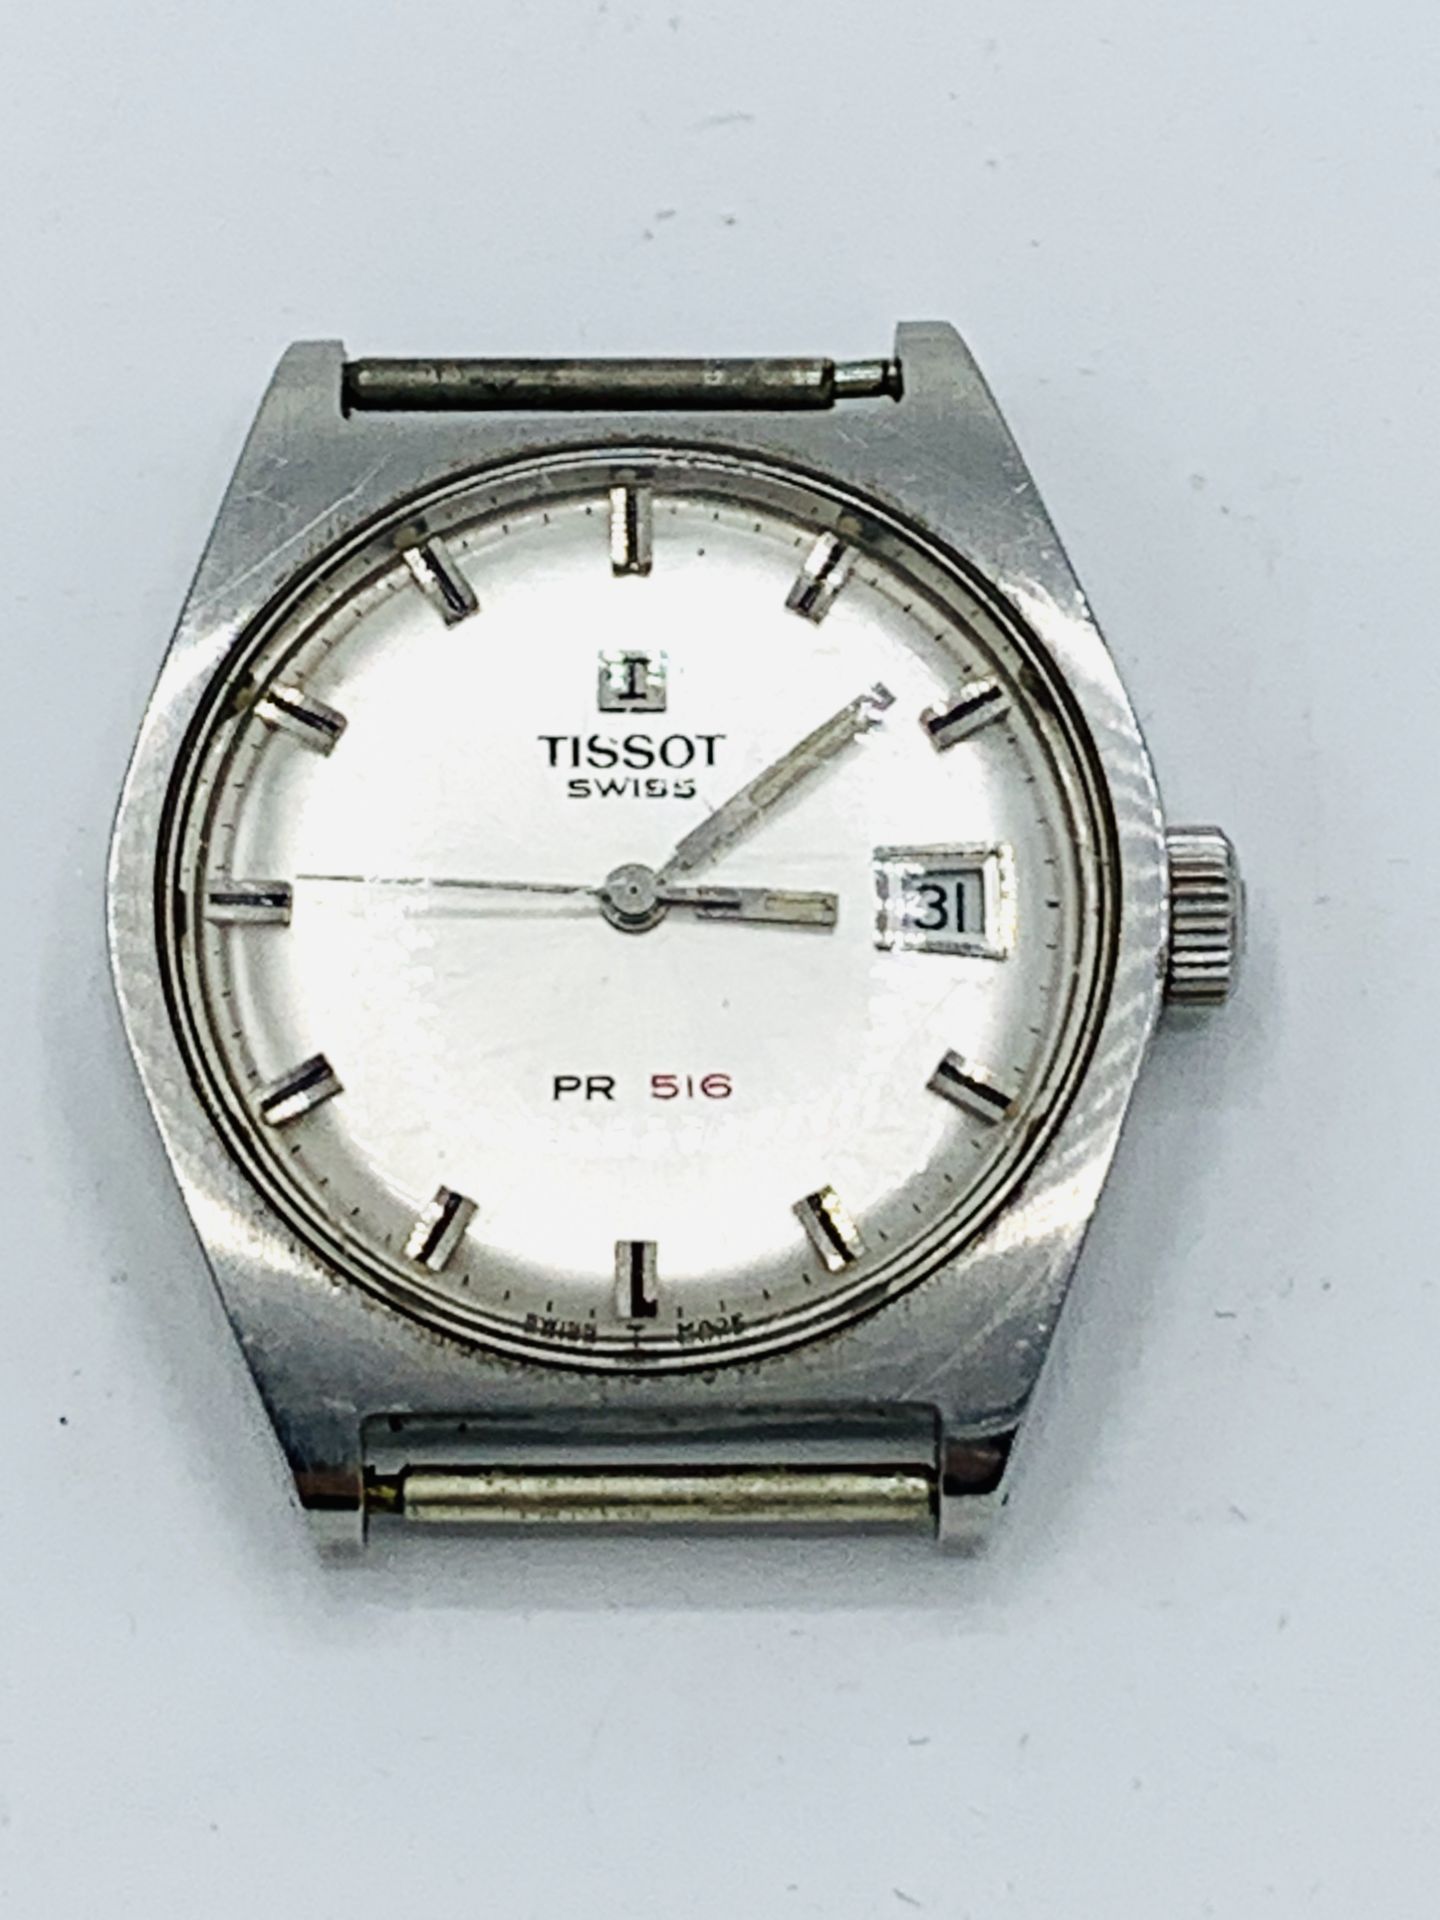 Tissot PR 516 gentleman's wrist watch, going